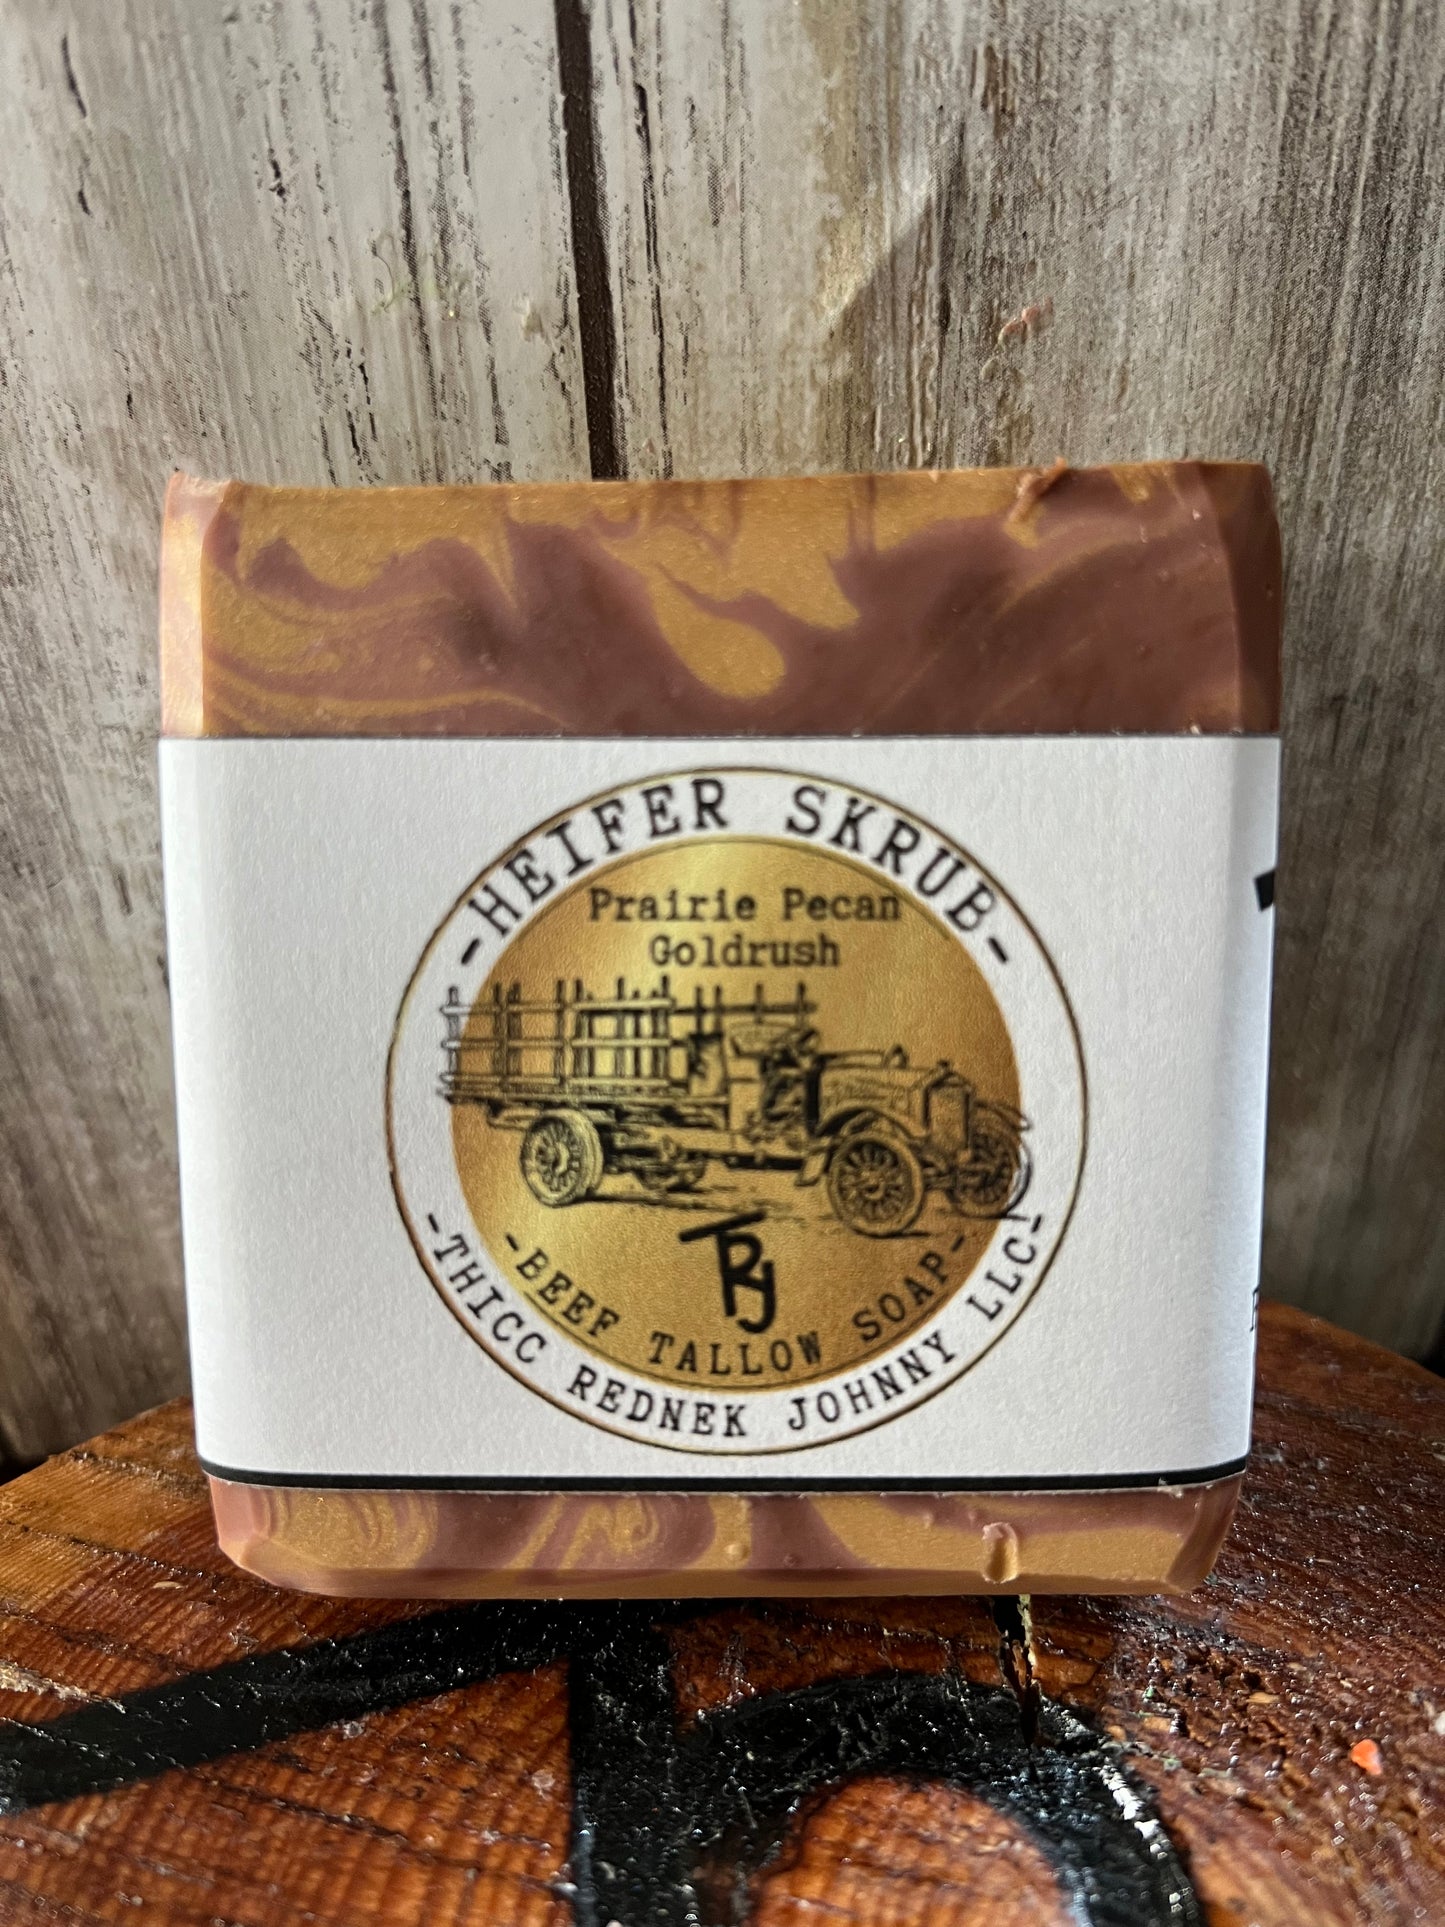 Heifer Skrub Prairie Pecan Goldrush (Pumpkin Pecan Waffles Type) Handmade Beef Tallow Soap